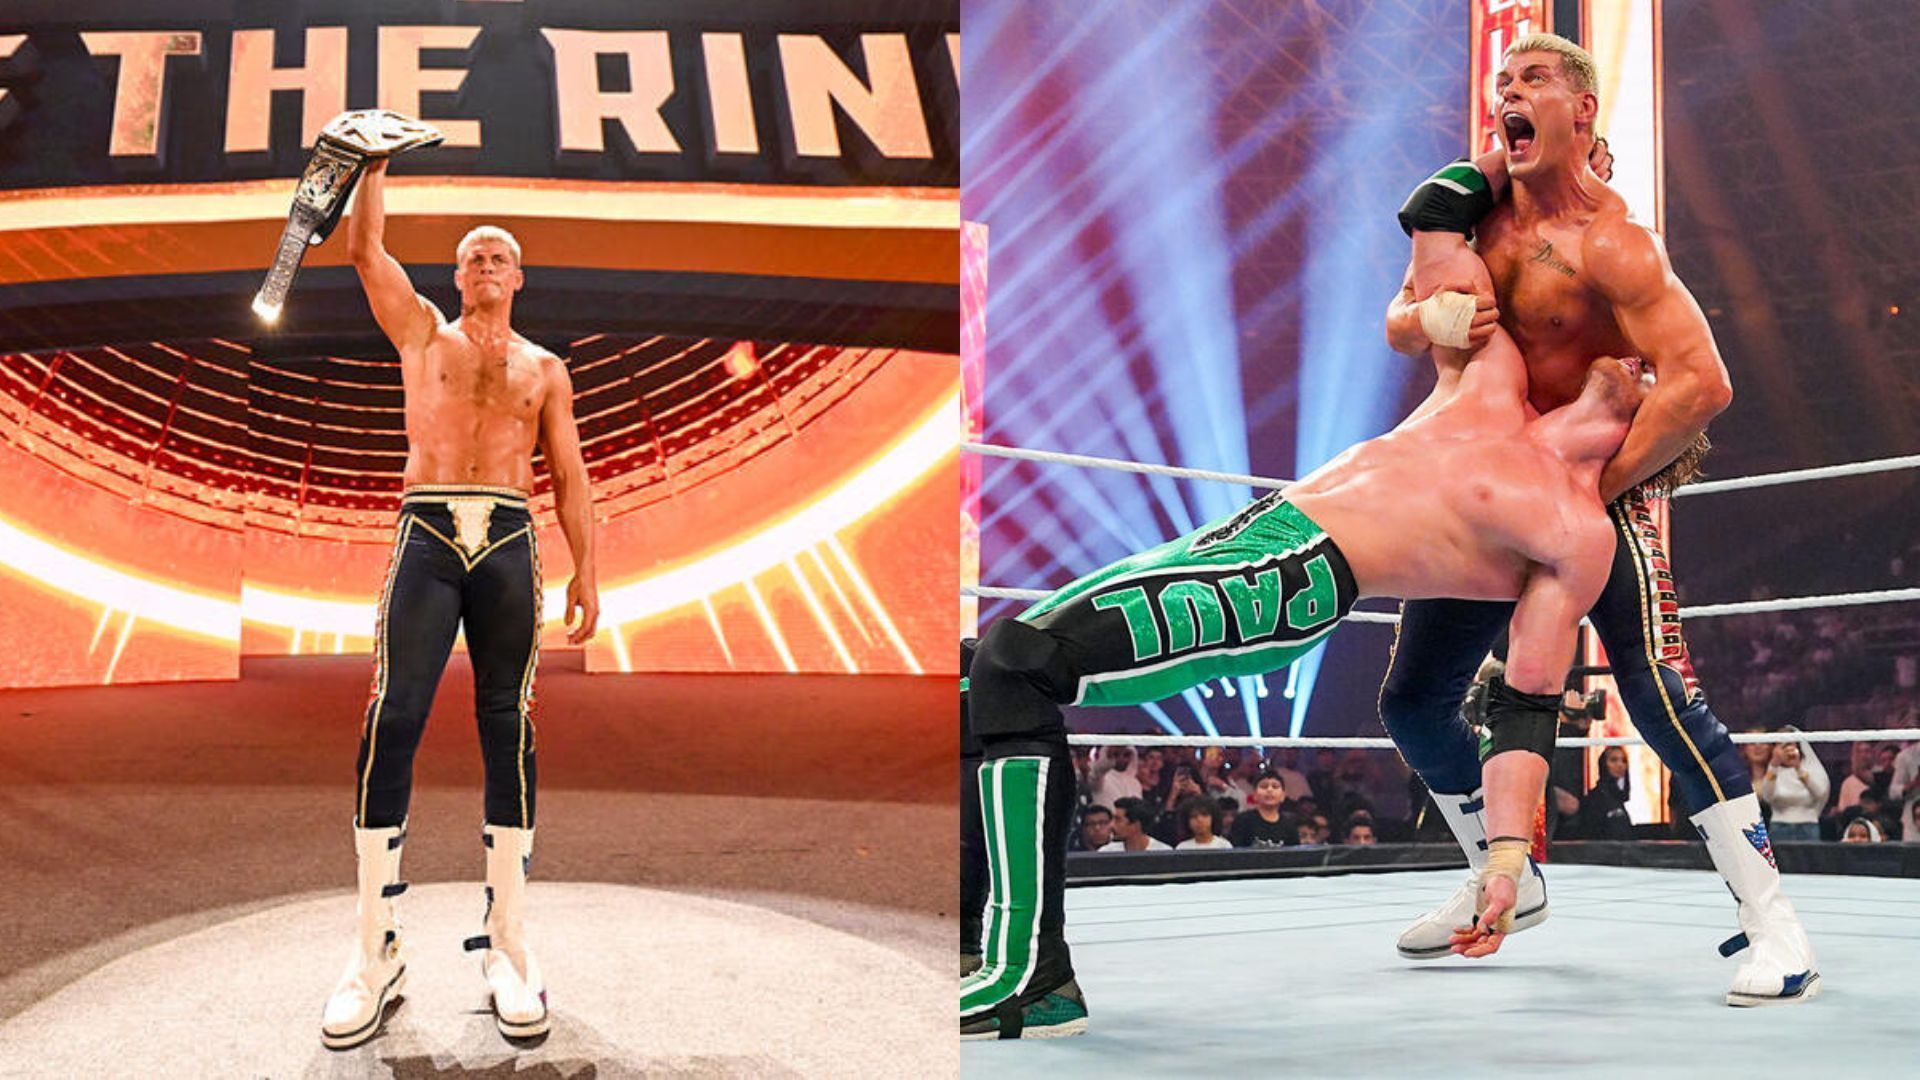 Cody Rhodes defeated Logan Paul